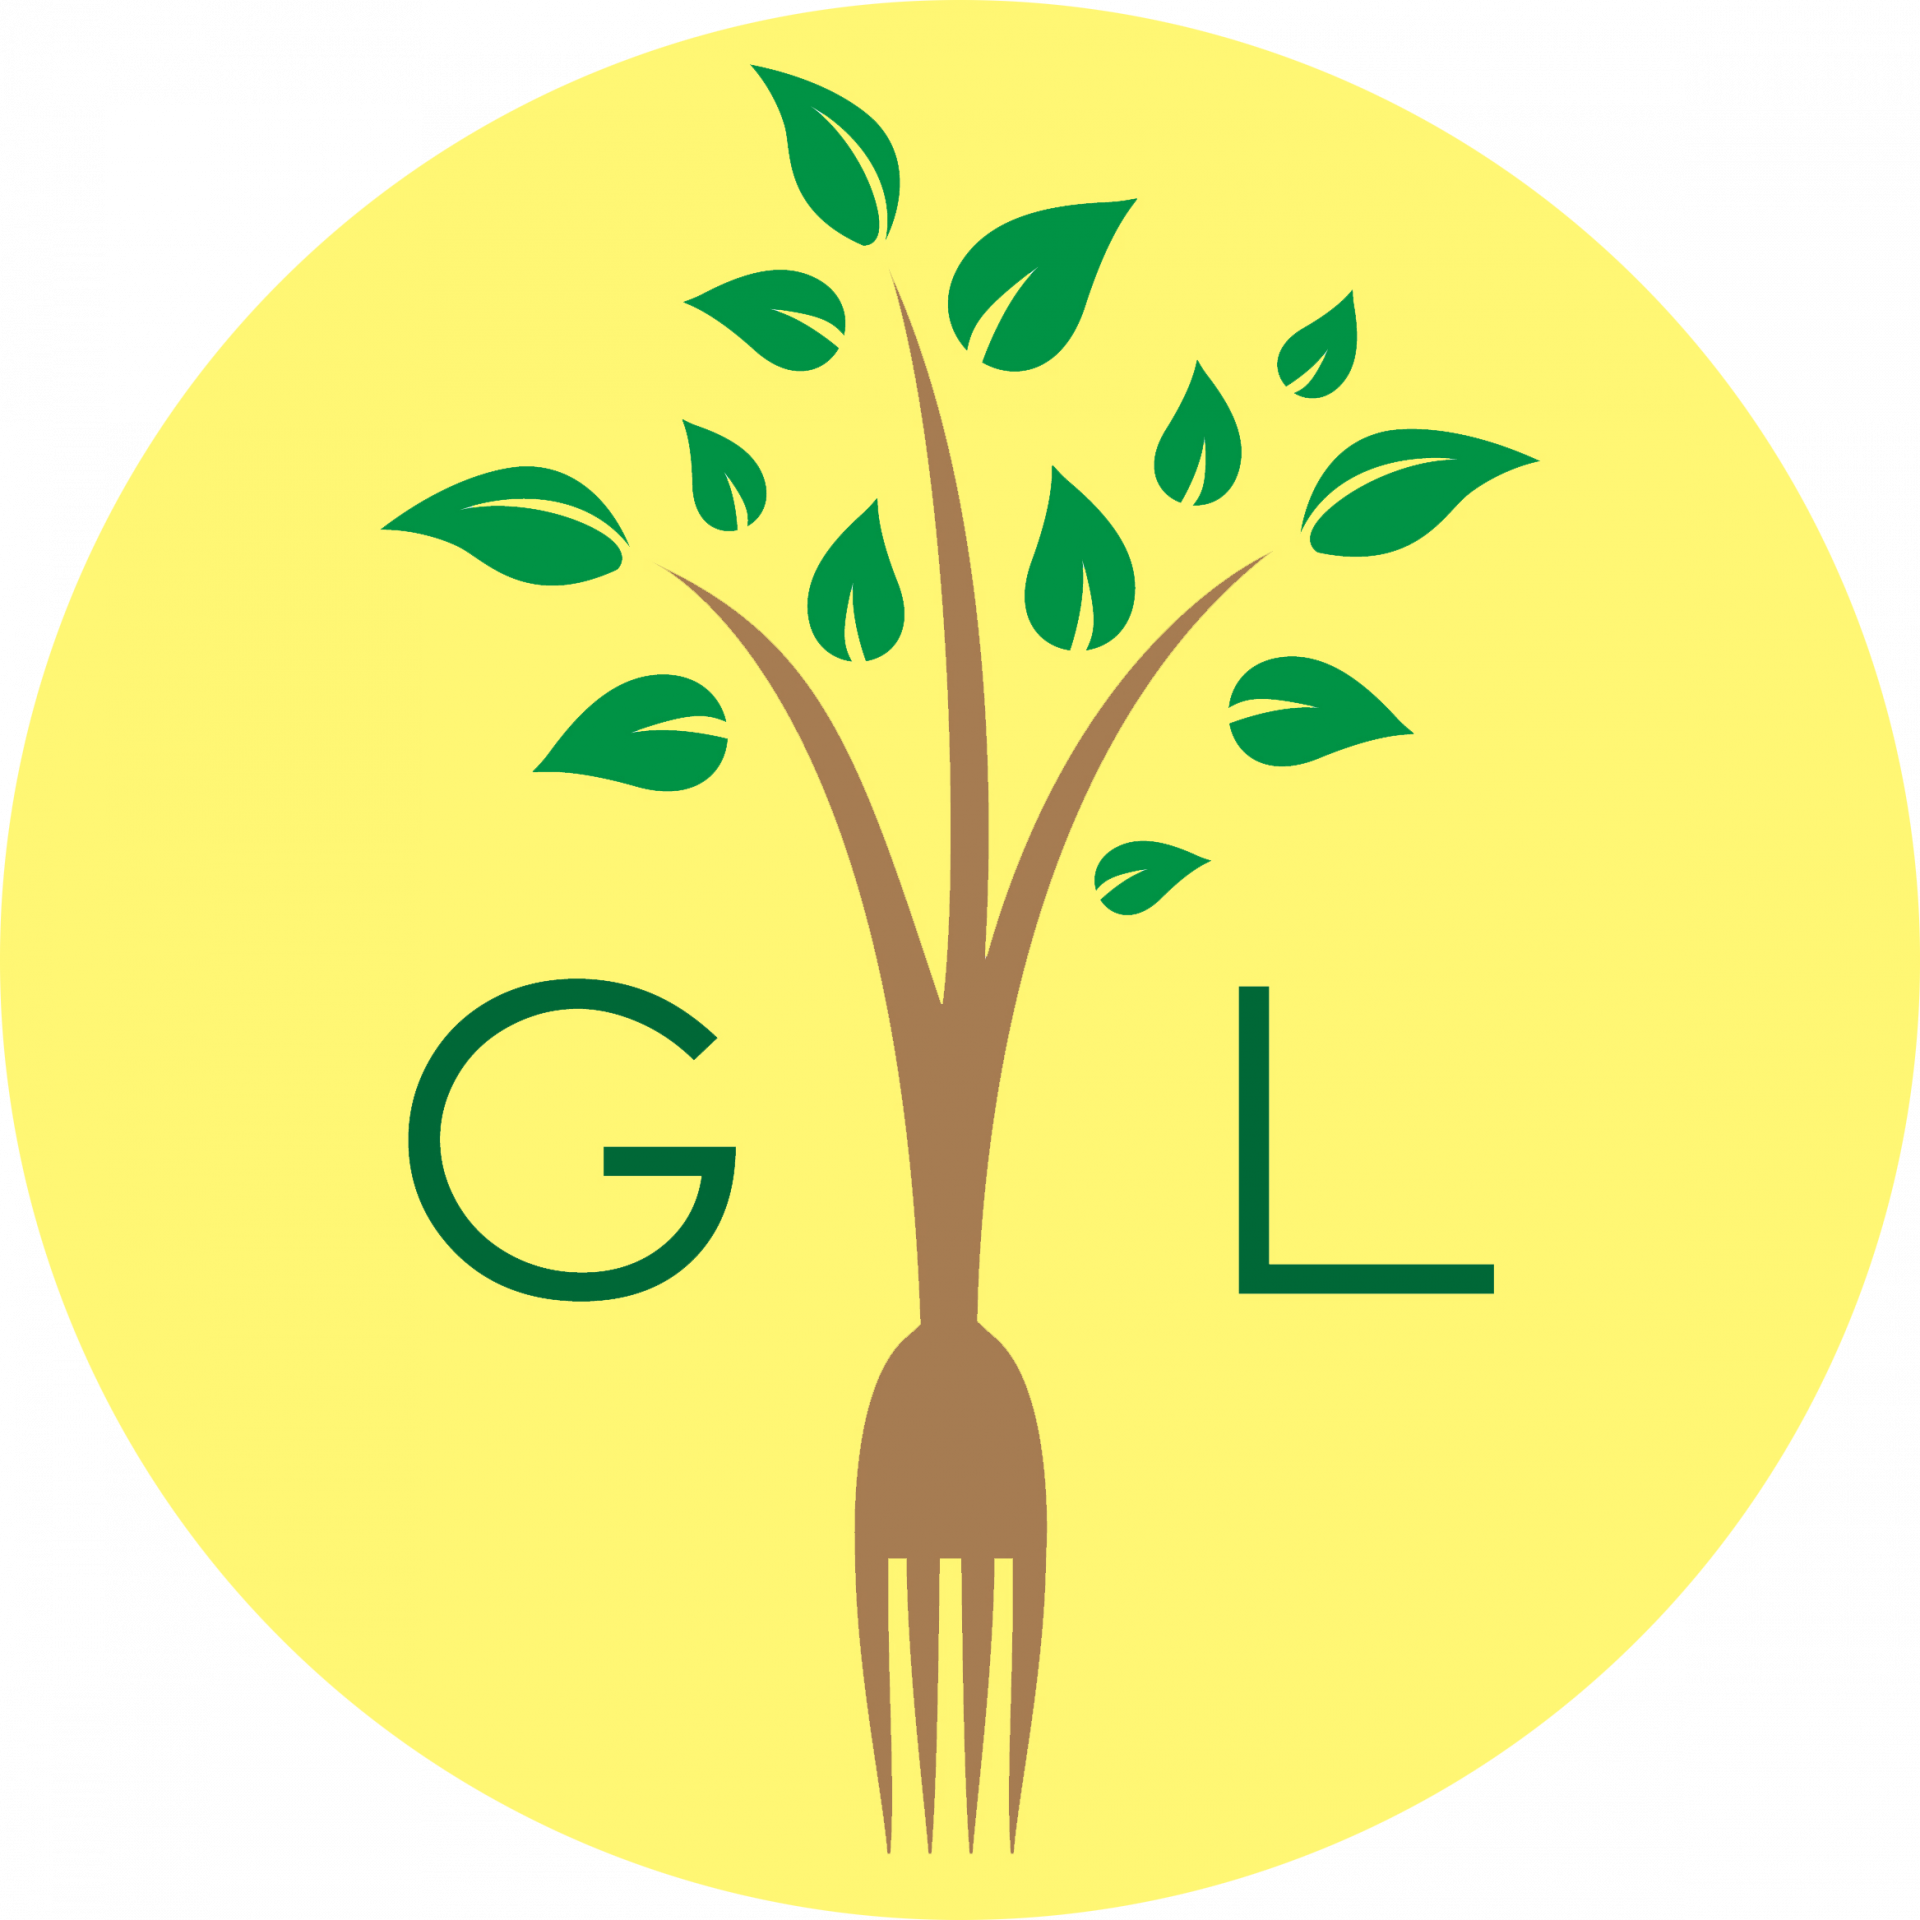 Green Life logo